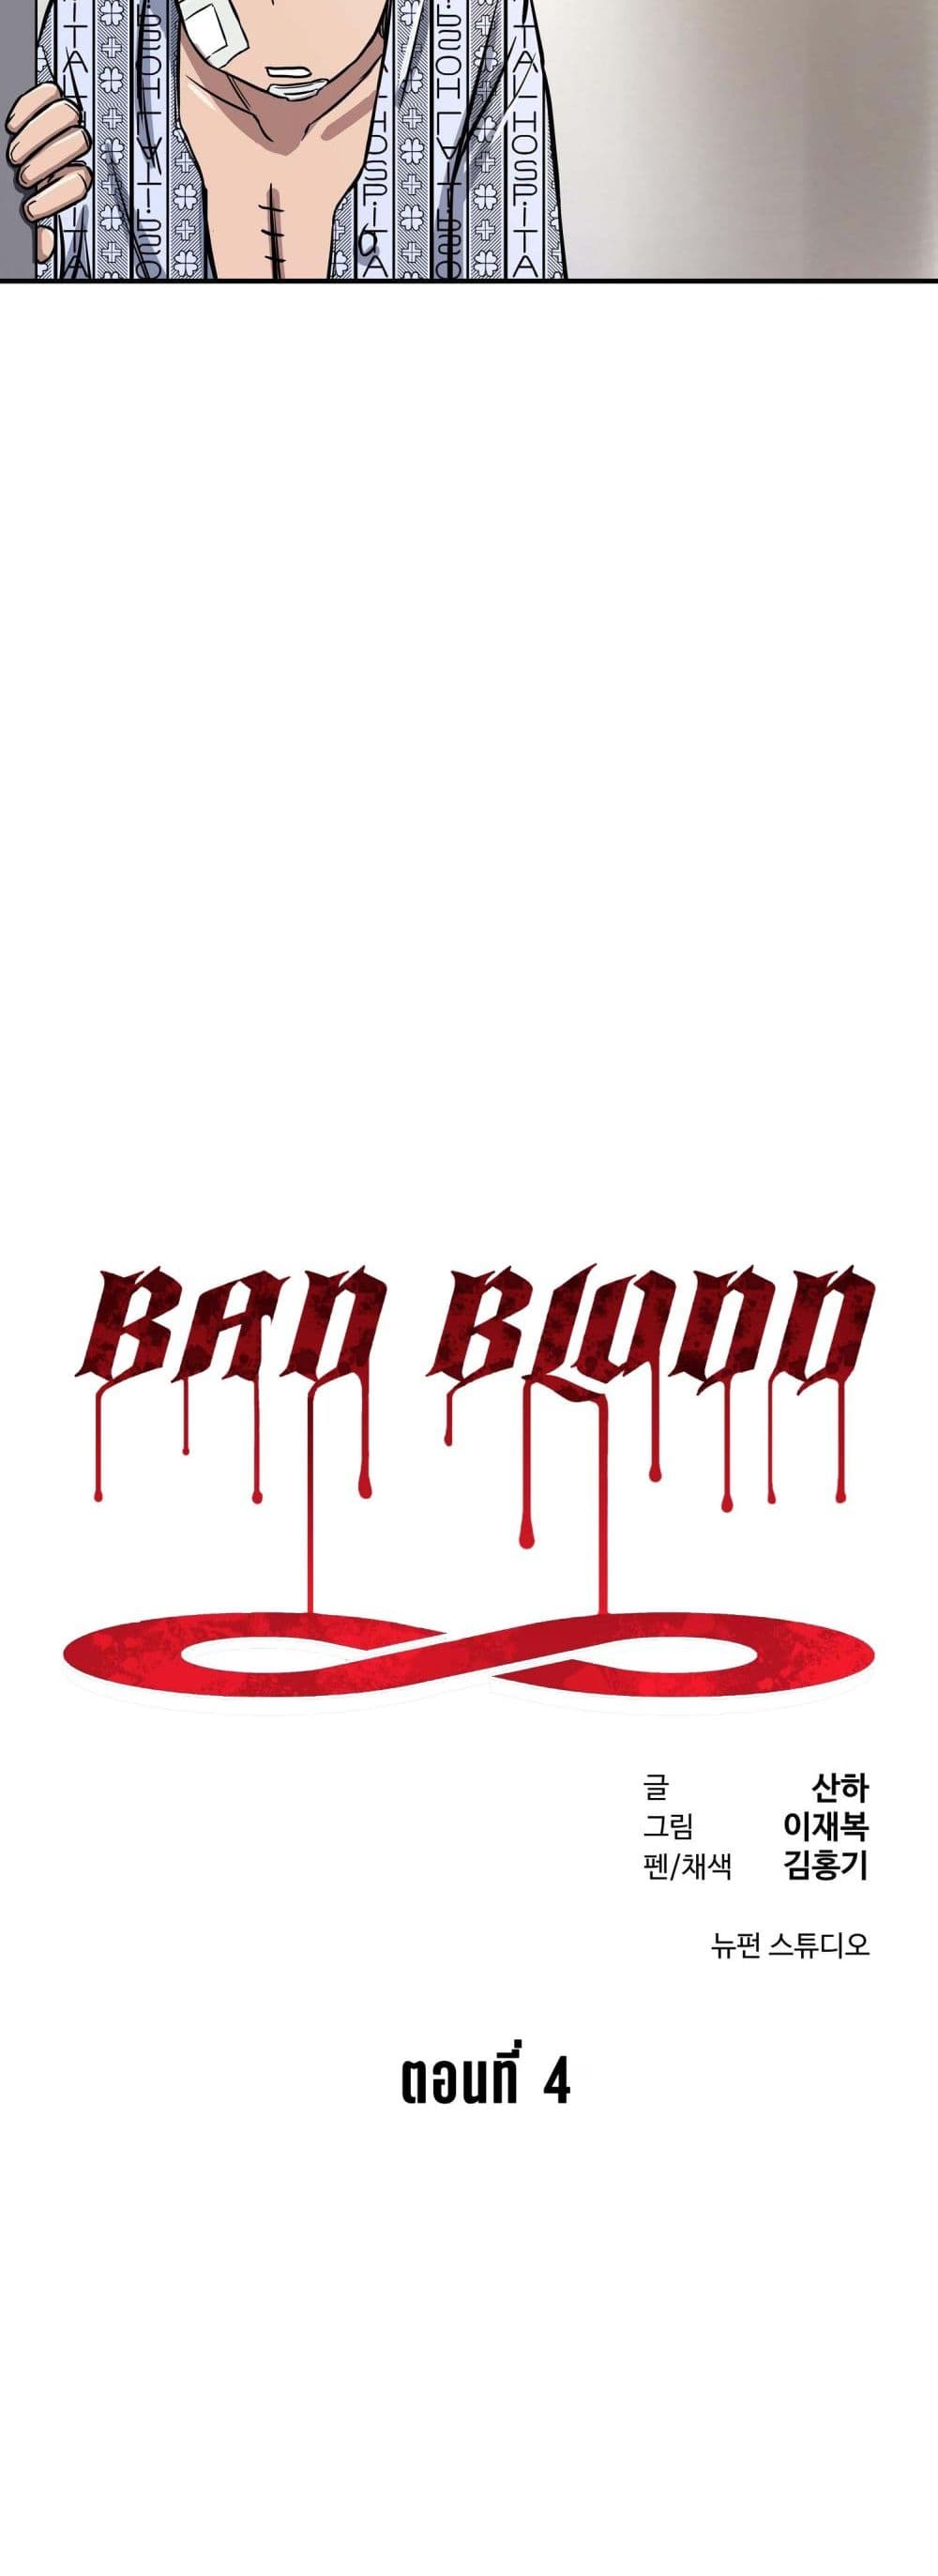 Bad Blood 4-4